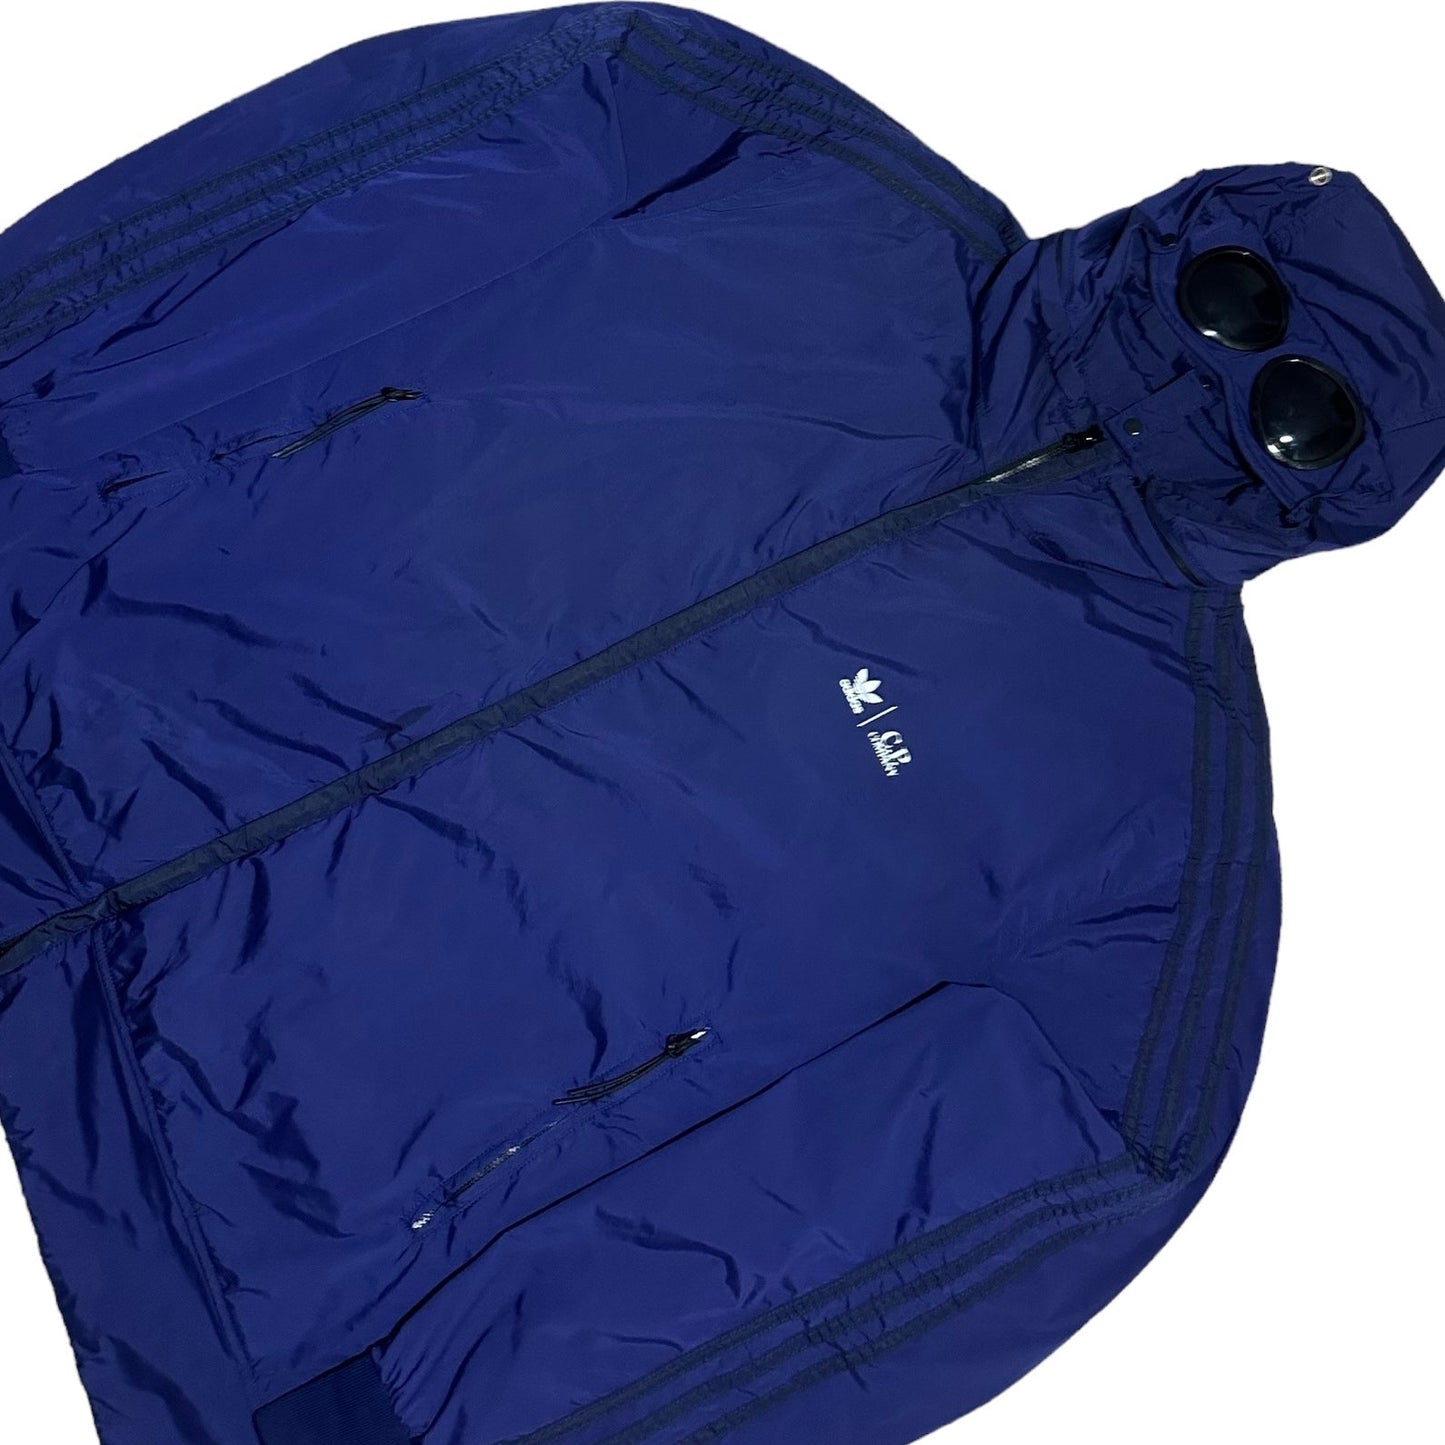 CP Company x Adidas Waterproof Goggle Jacket